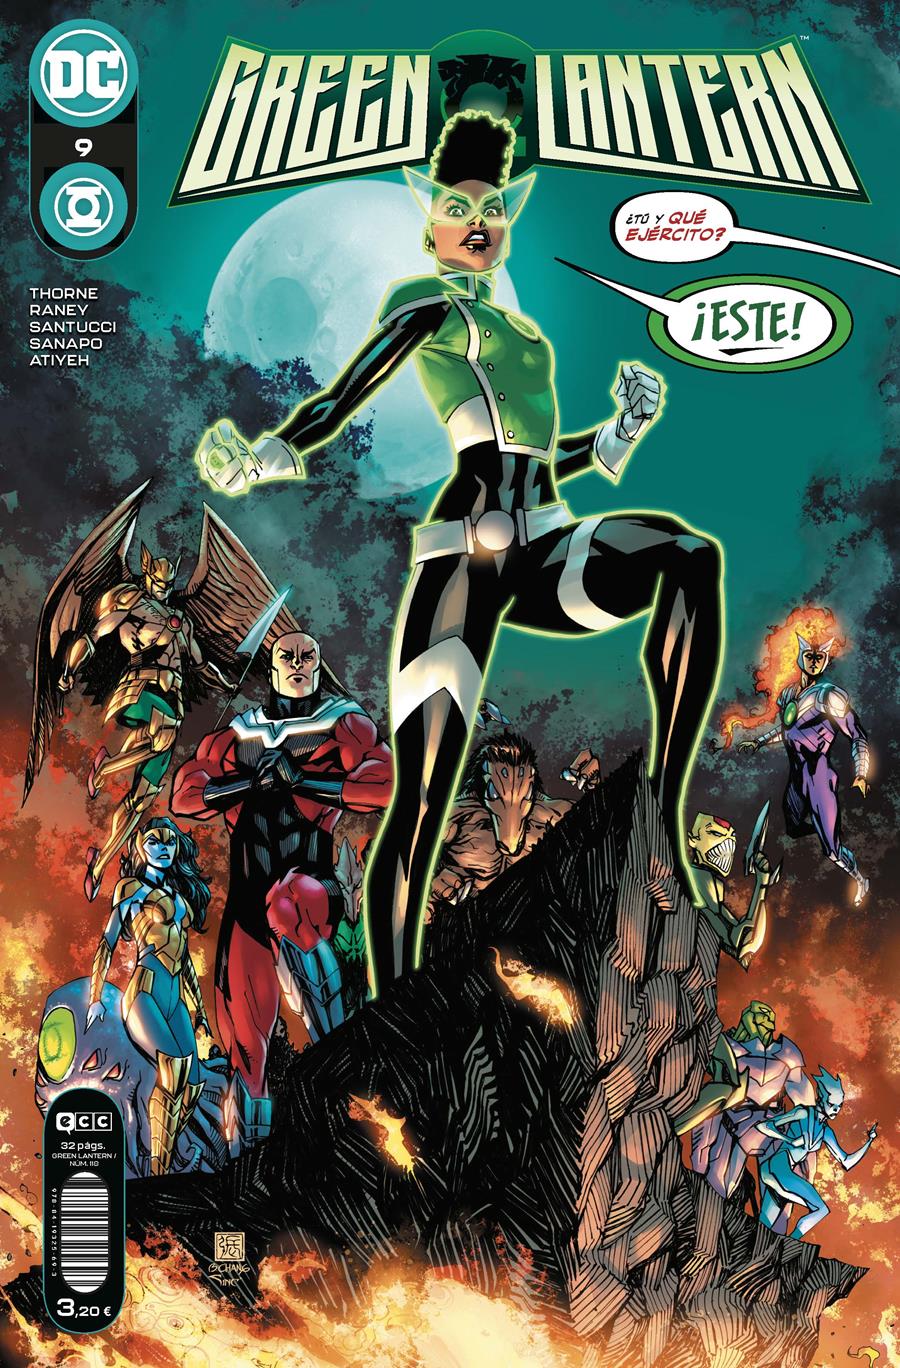 Green Lantern núm. 9/ 118 | N0722-ECC14 | Geoffrey Thorne / Marco Santucci / Tom Raney | Terra de Còmic - Tu tienda de cómics online especializada en cómics, manga y merchandising